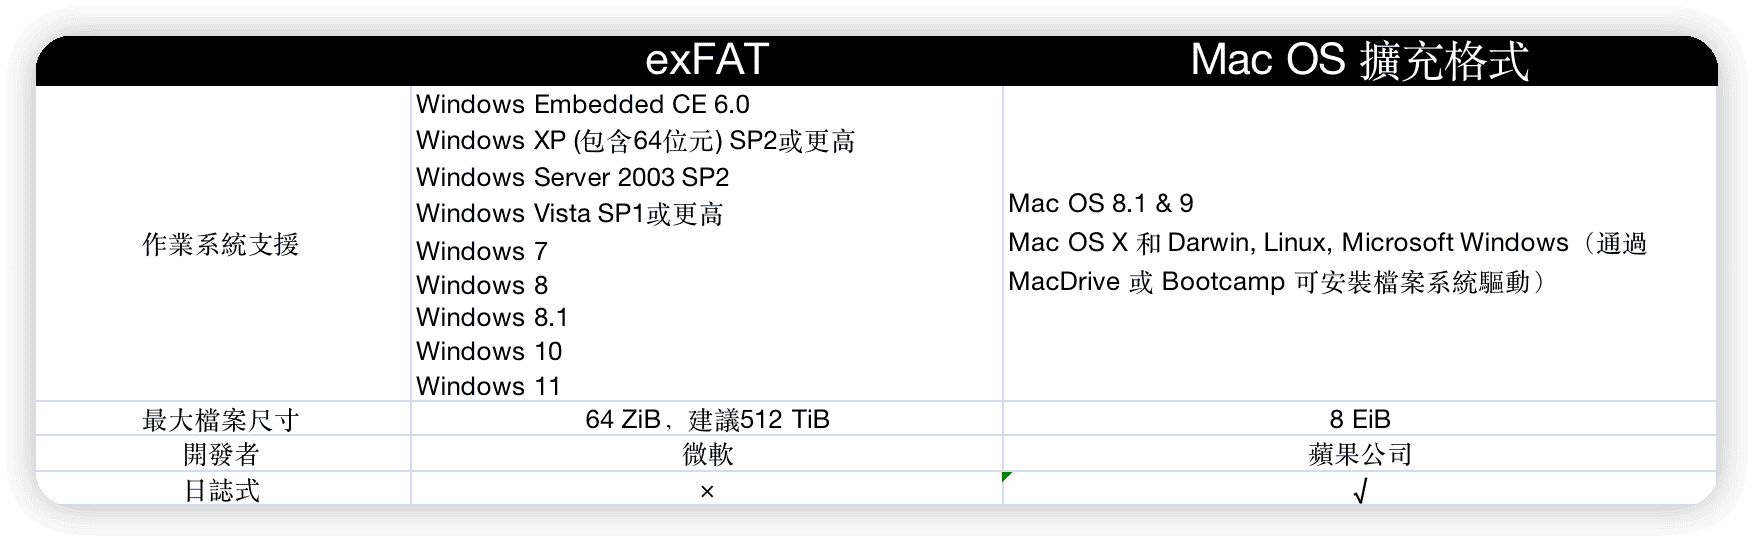 exFAT 與 Mac OS 擴充格式比較